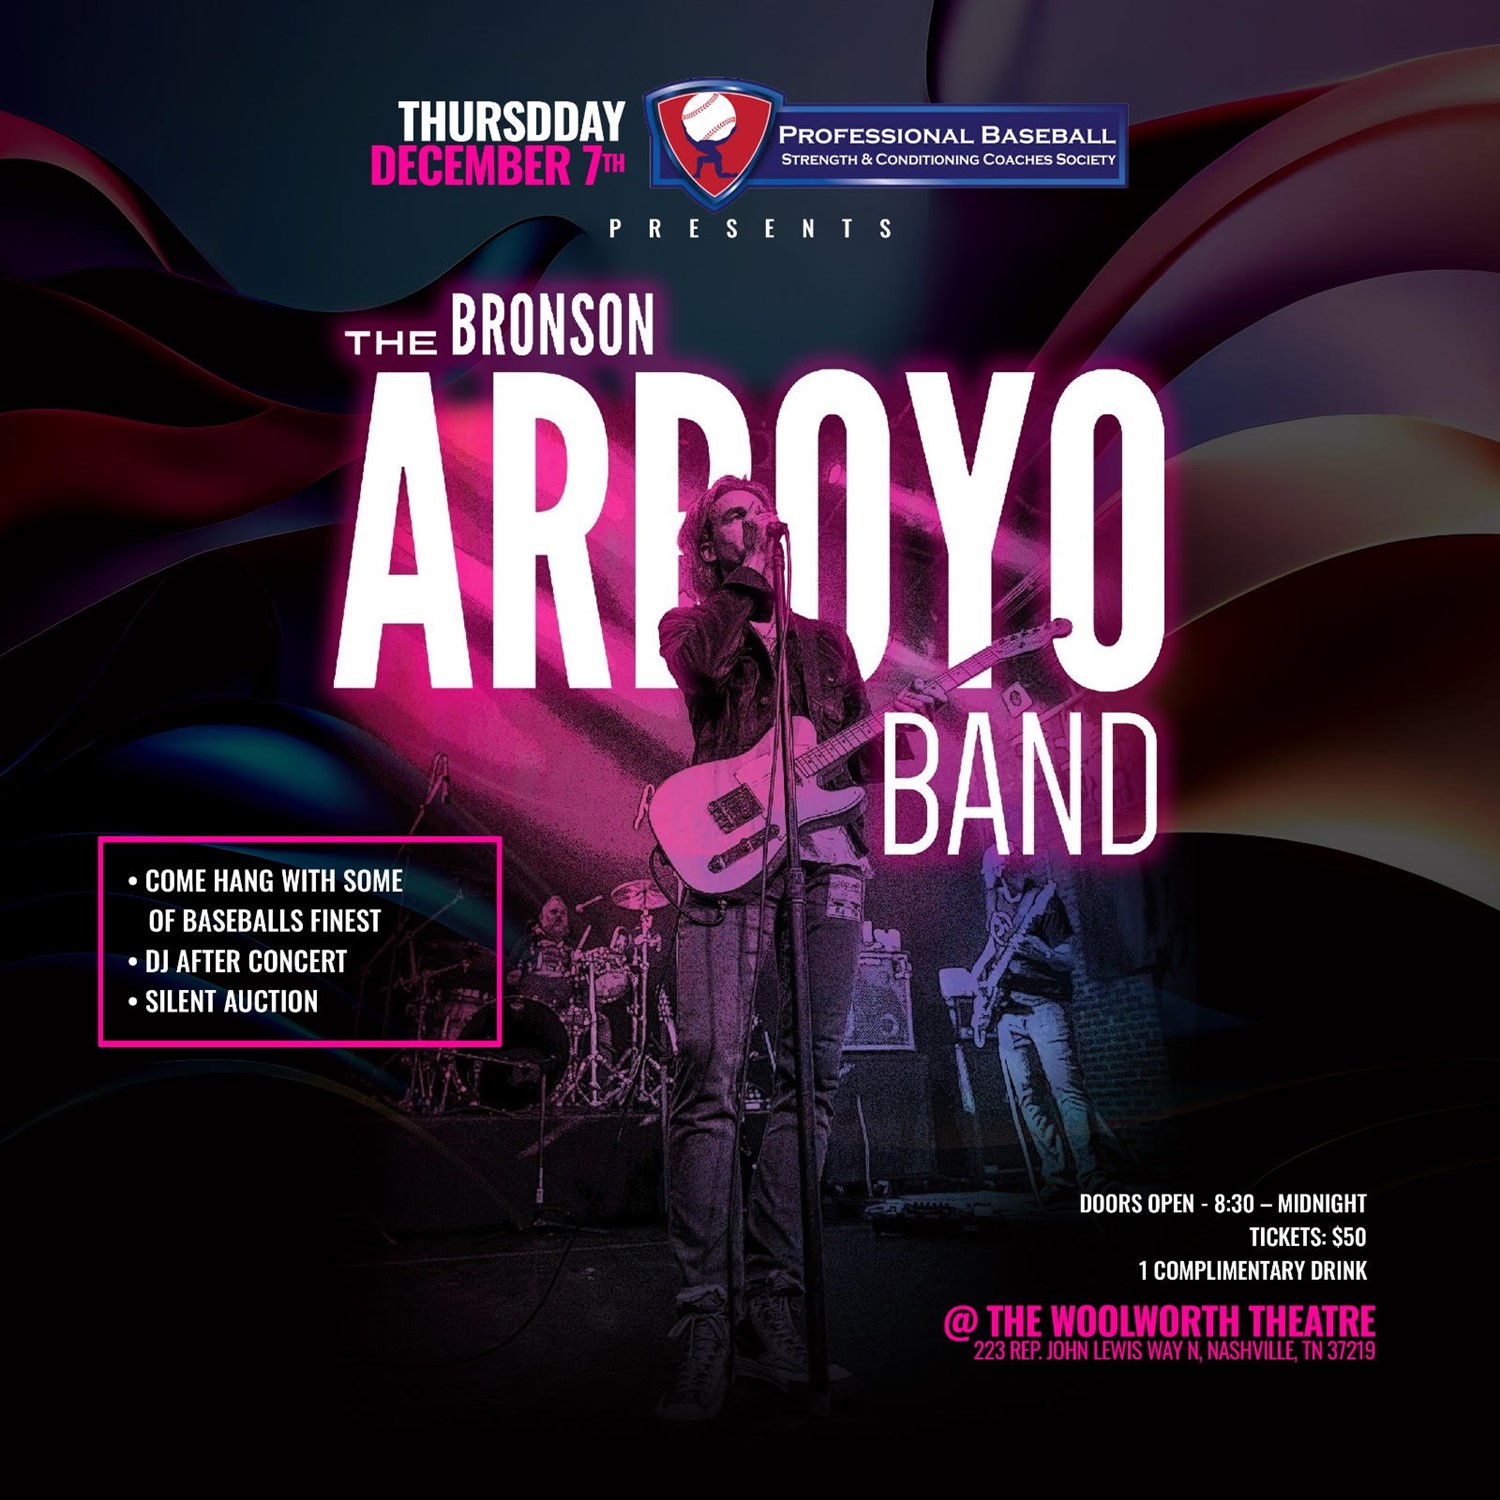 The Bronson Arroyo Band - Information